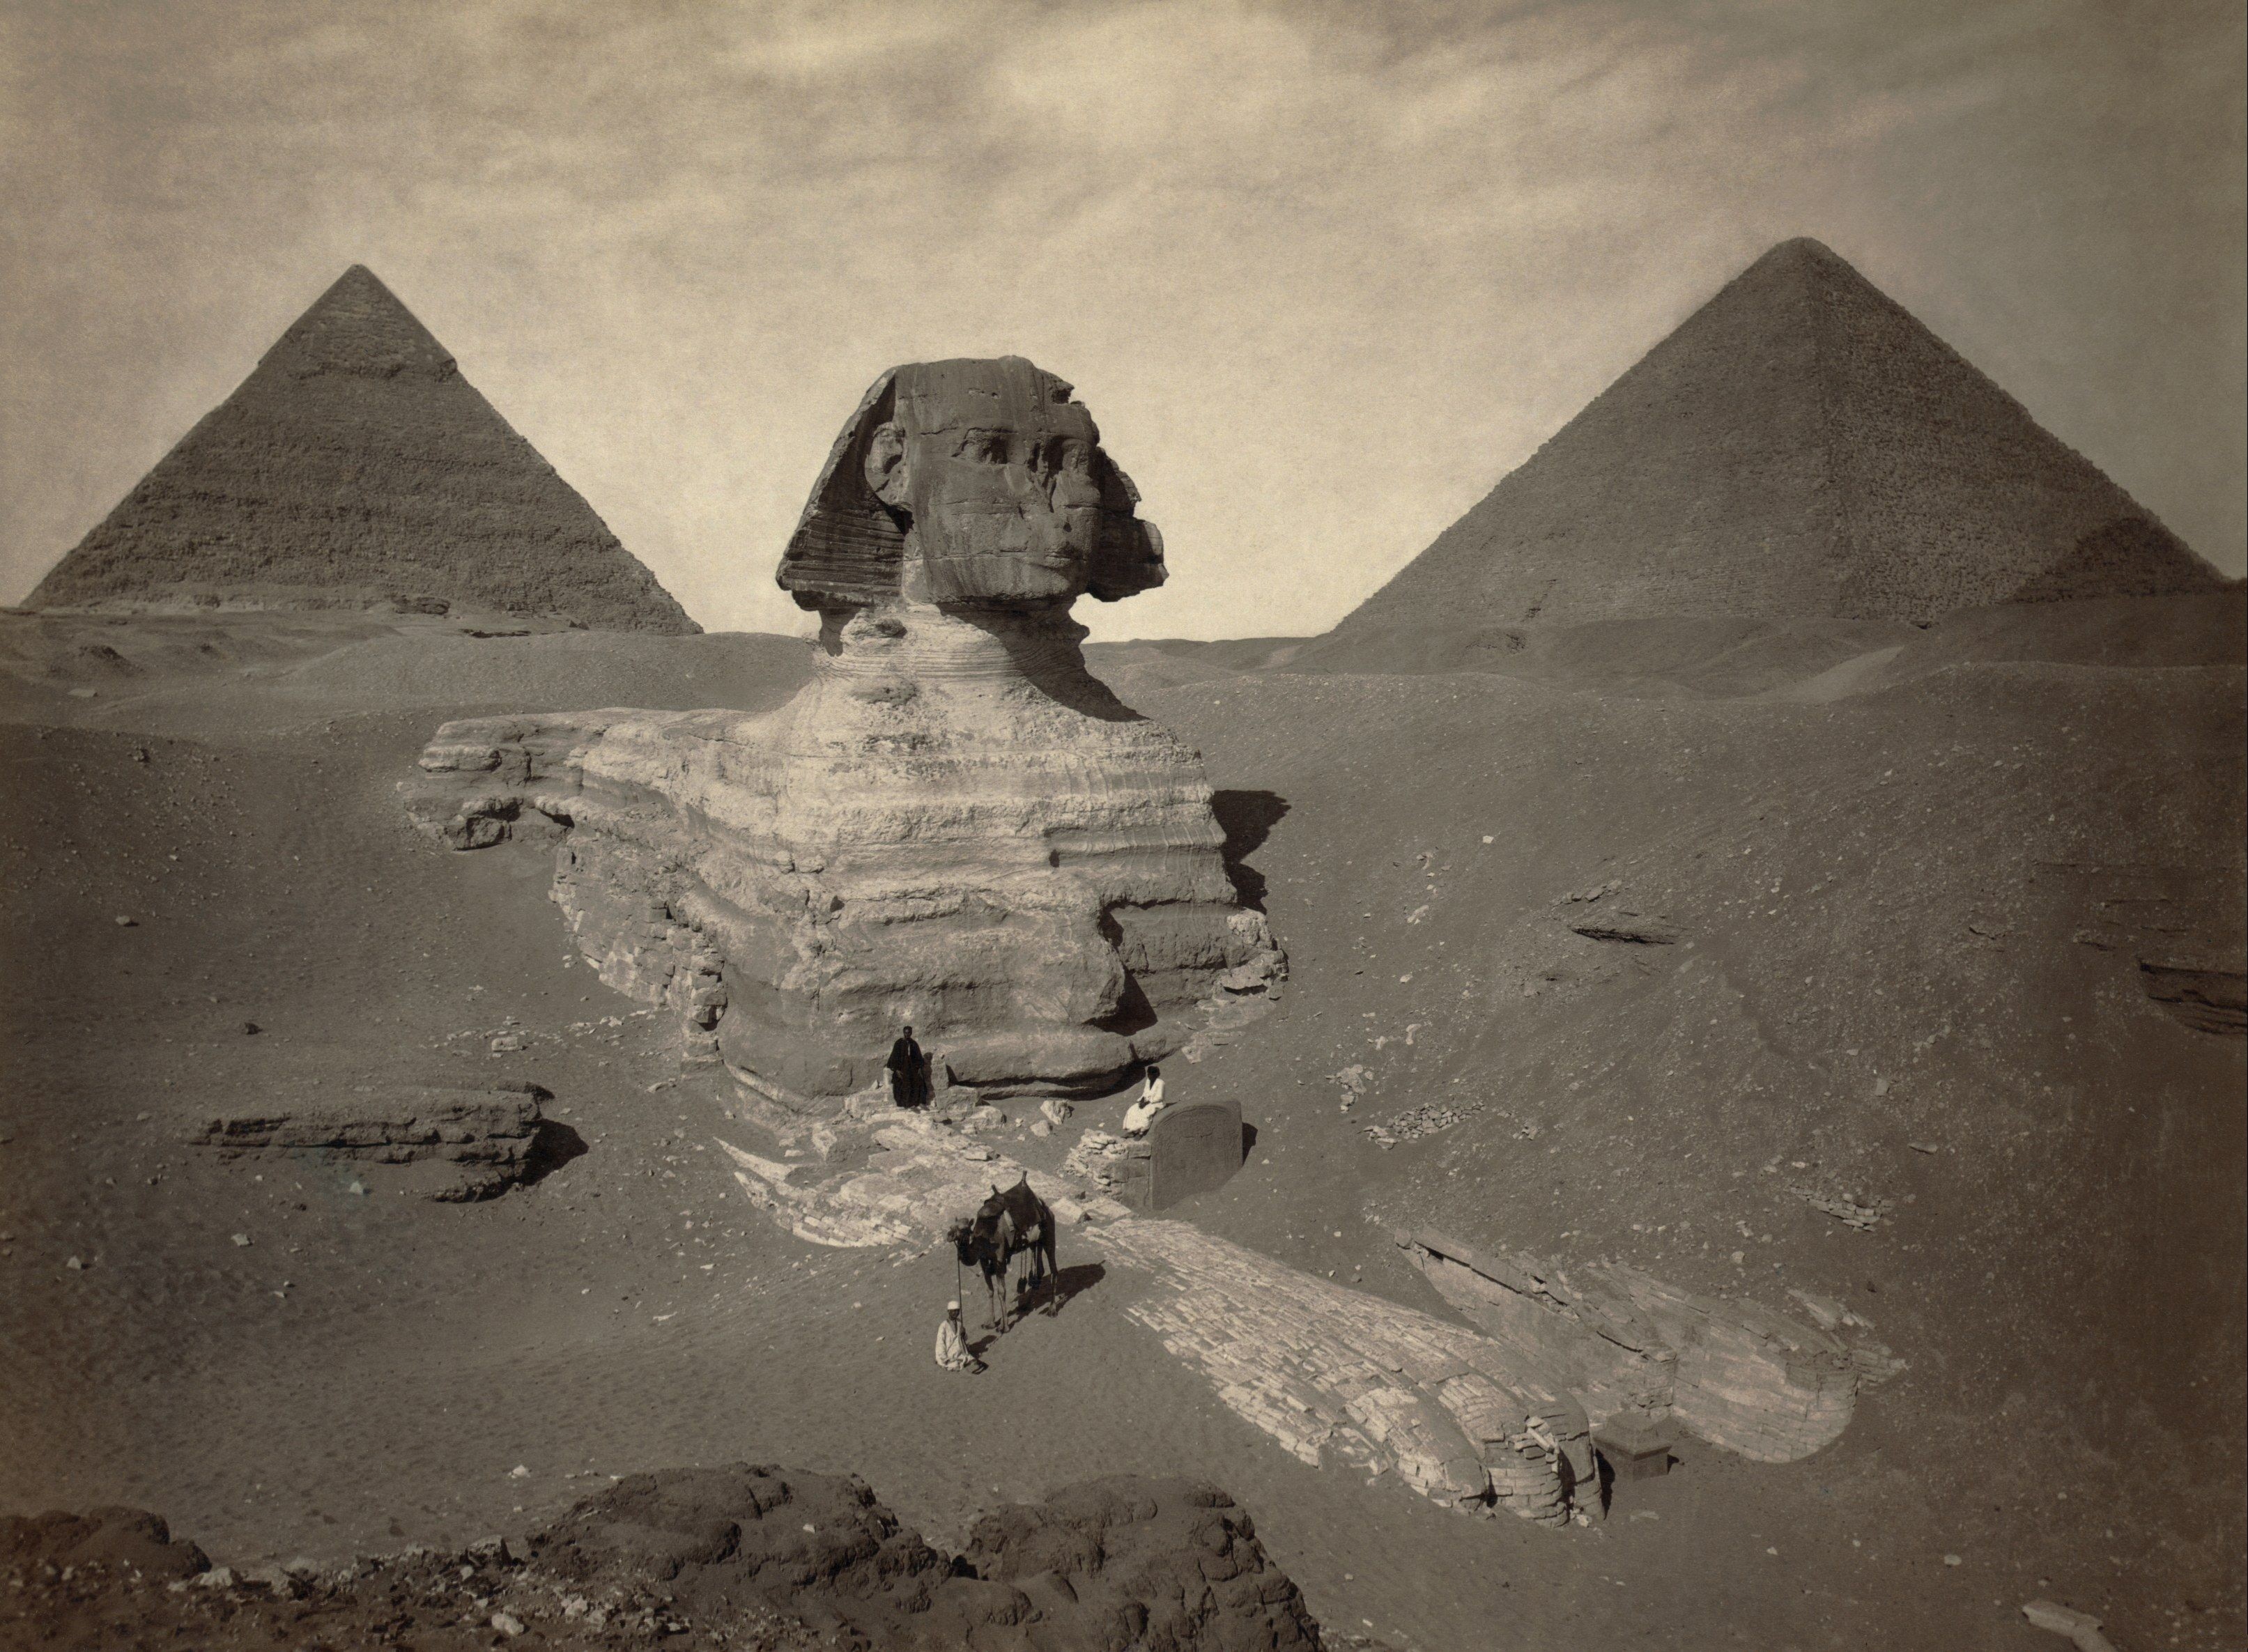 Nature Landscape Monochrome Vintage Old Photos Historic Egypt Pyramid Sphinx Pyramids Of Giza Sphinx 3226x2371